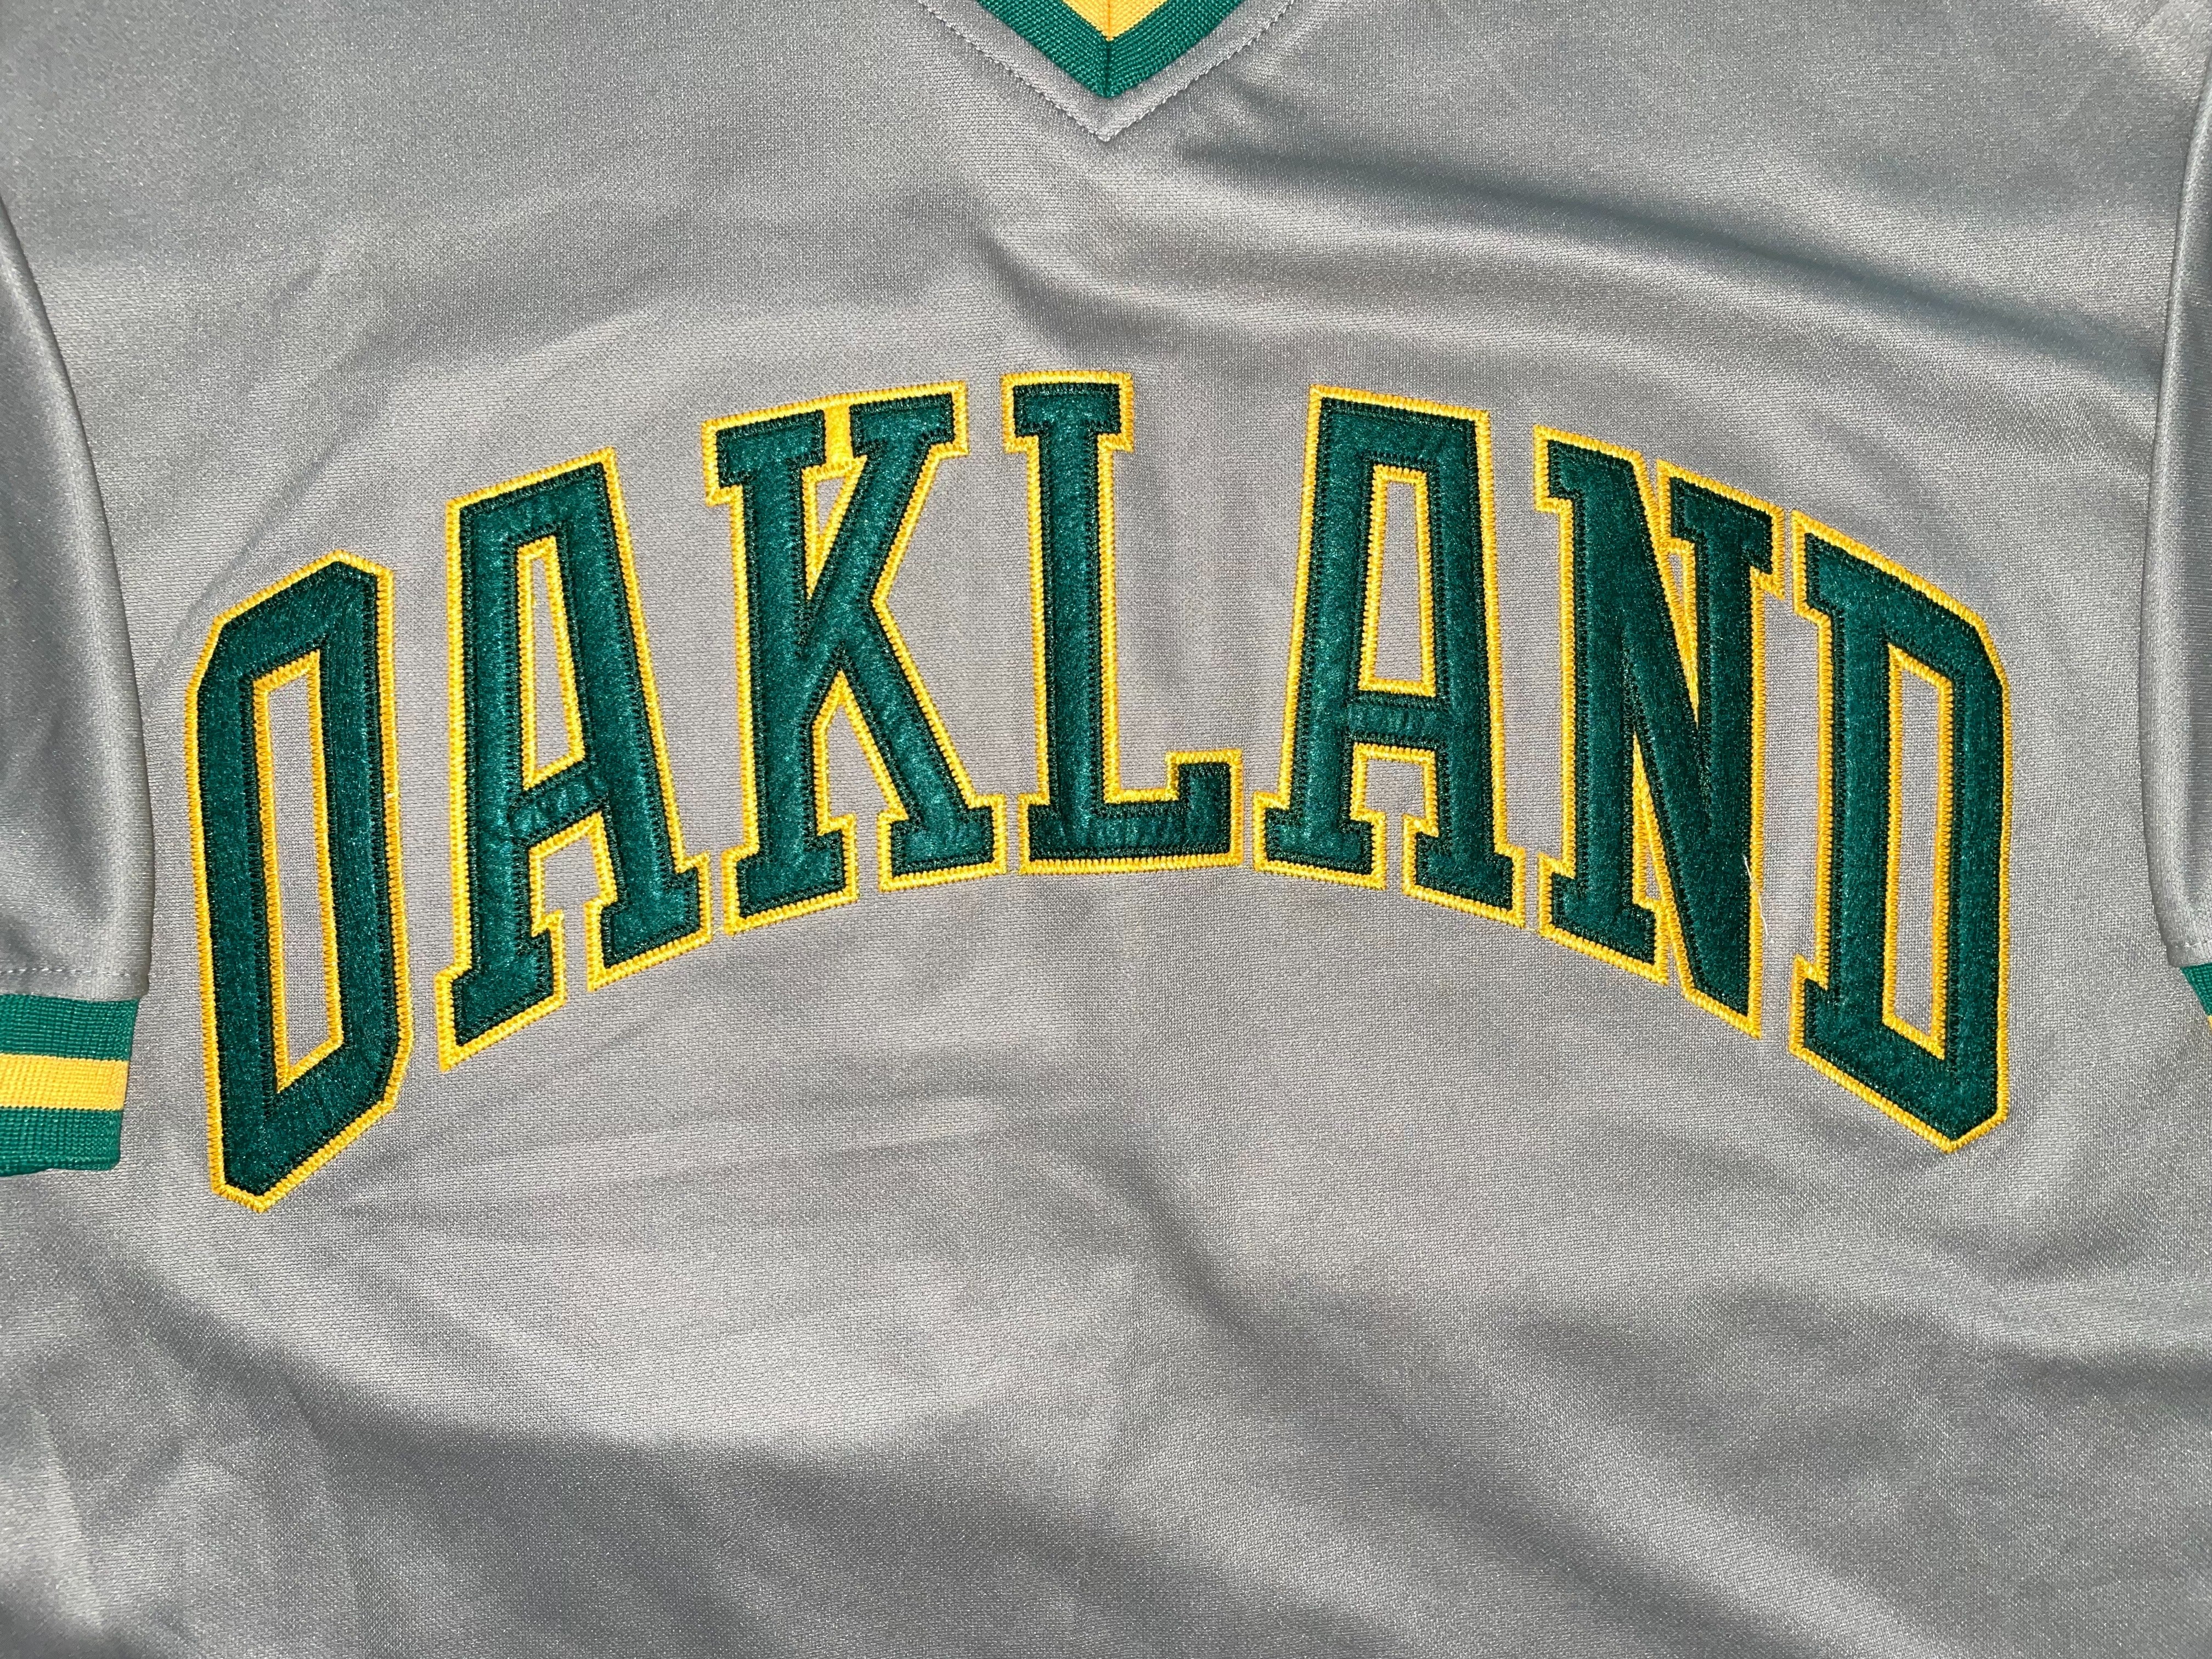 retro oakland a's jersey